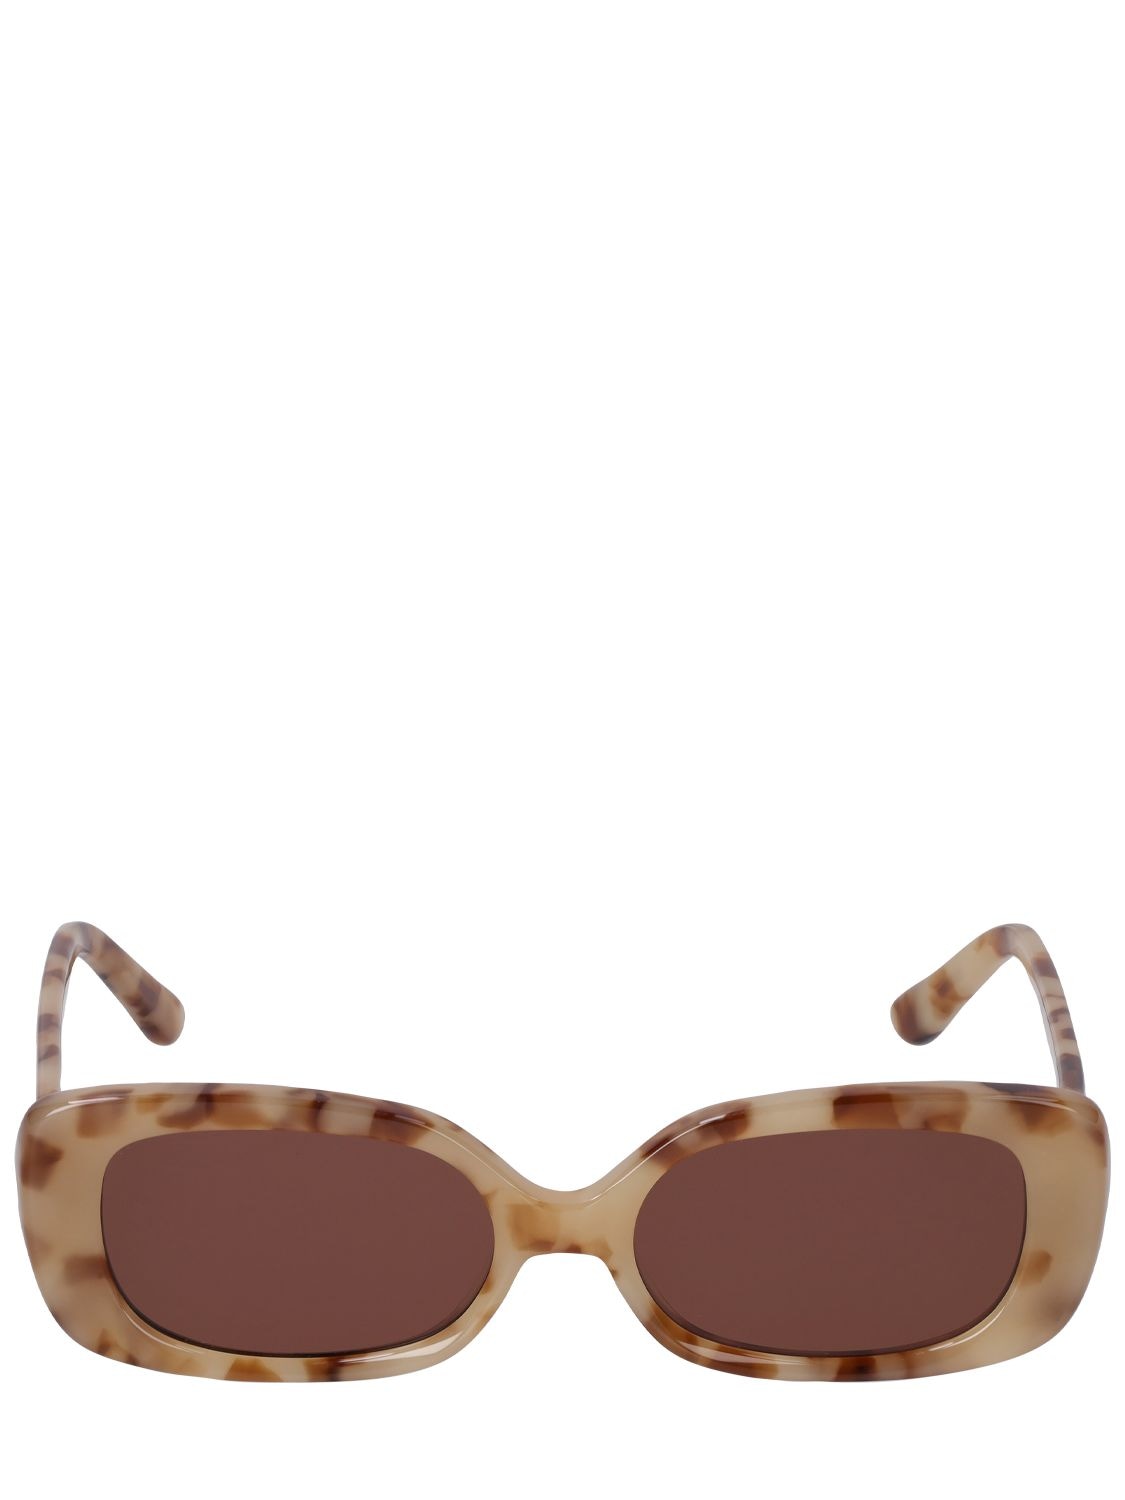 Image of Zou Bisou Squared Acetate Sunglasses